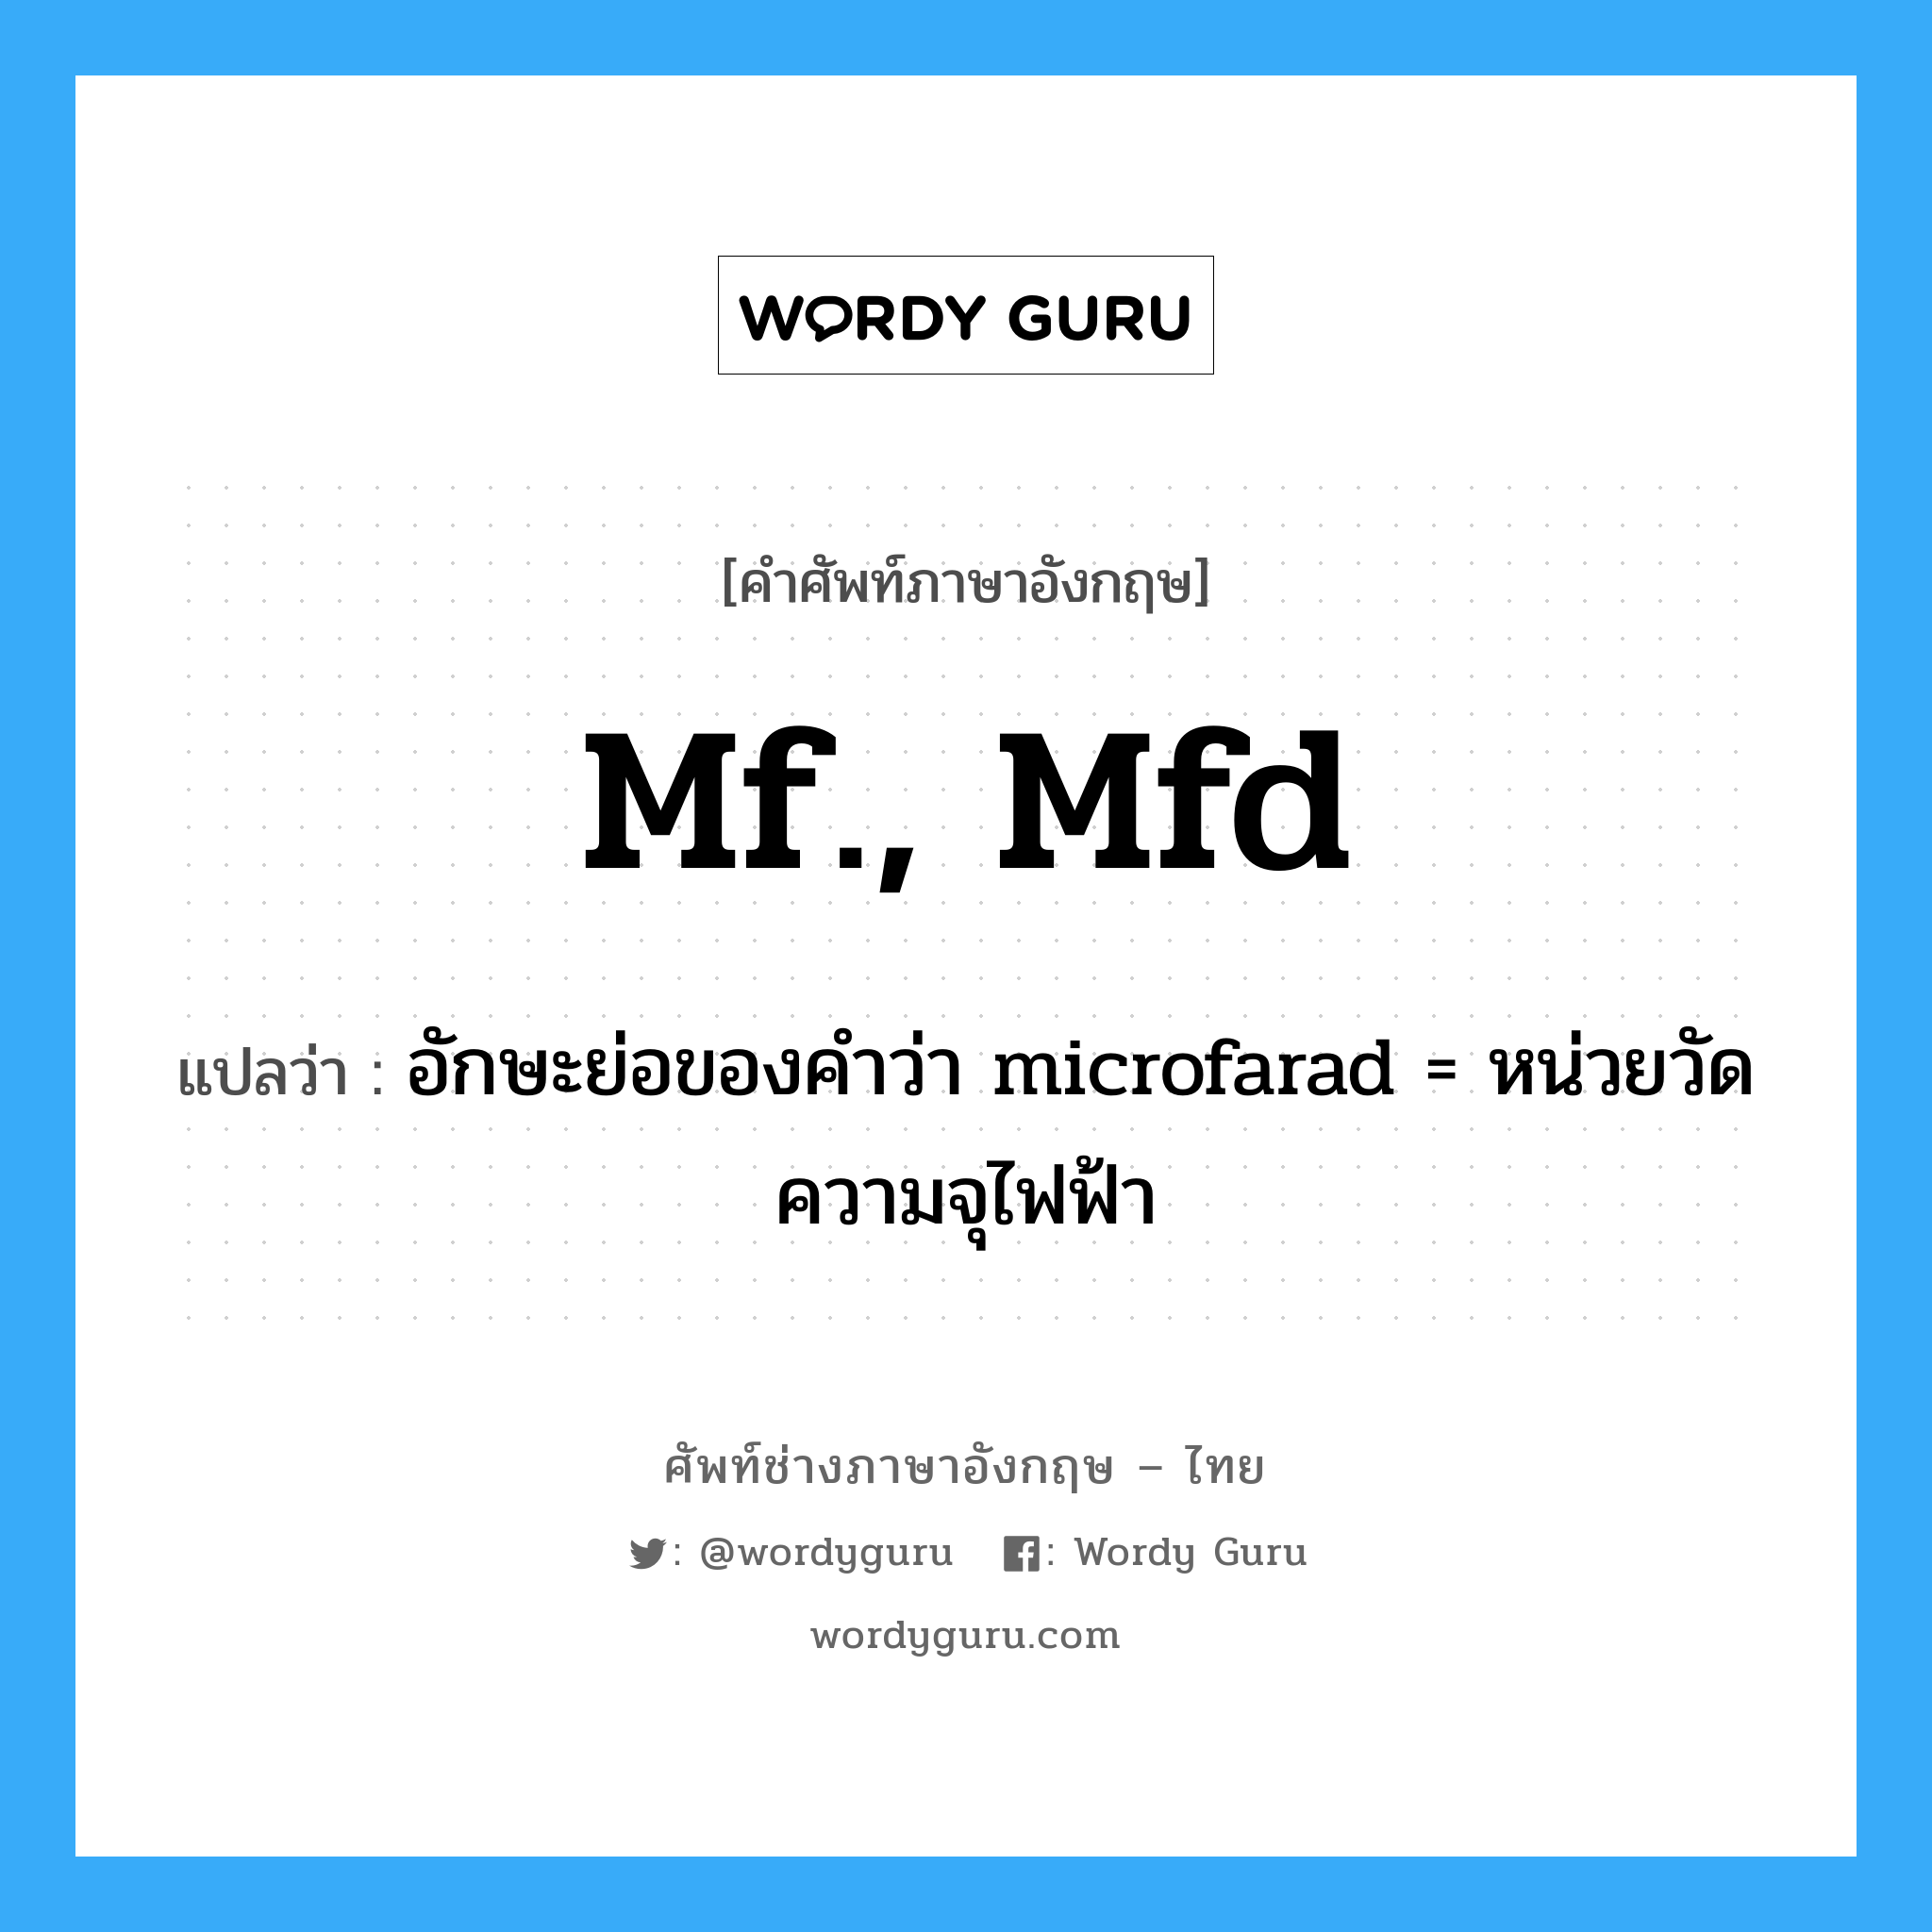 mf., mfd. แปลว่า?, คำศัพท์ช่างภาษาอังกฤษ - ไทย mf., mfd คำศัพท์ภาษาอังกฤษ mf., mfd แปลว่า อักษะย่อของคำว่า microfarad = หน่วยวัดความจุไฟฟ้า